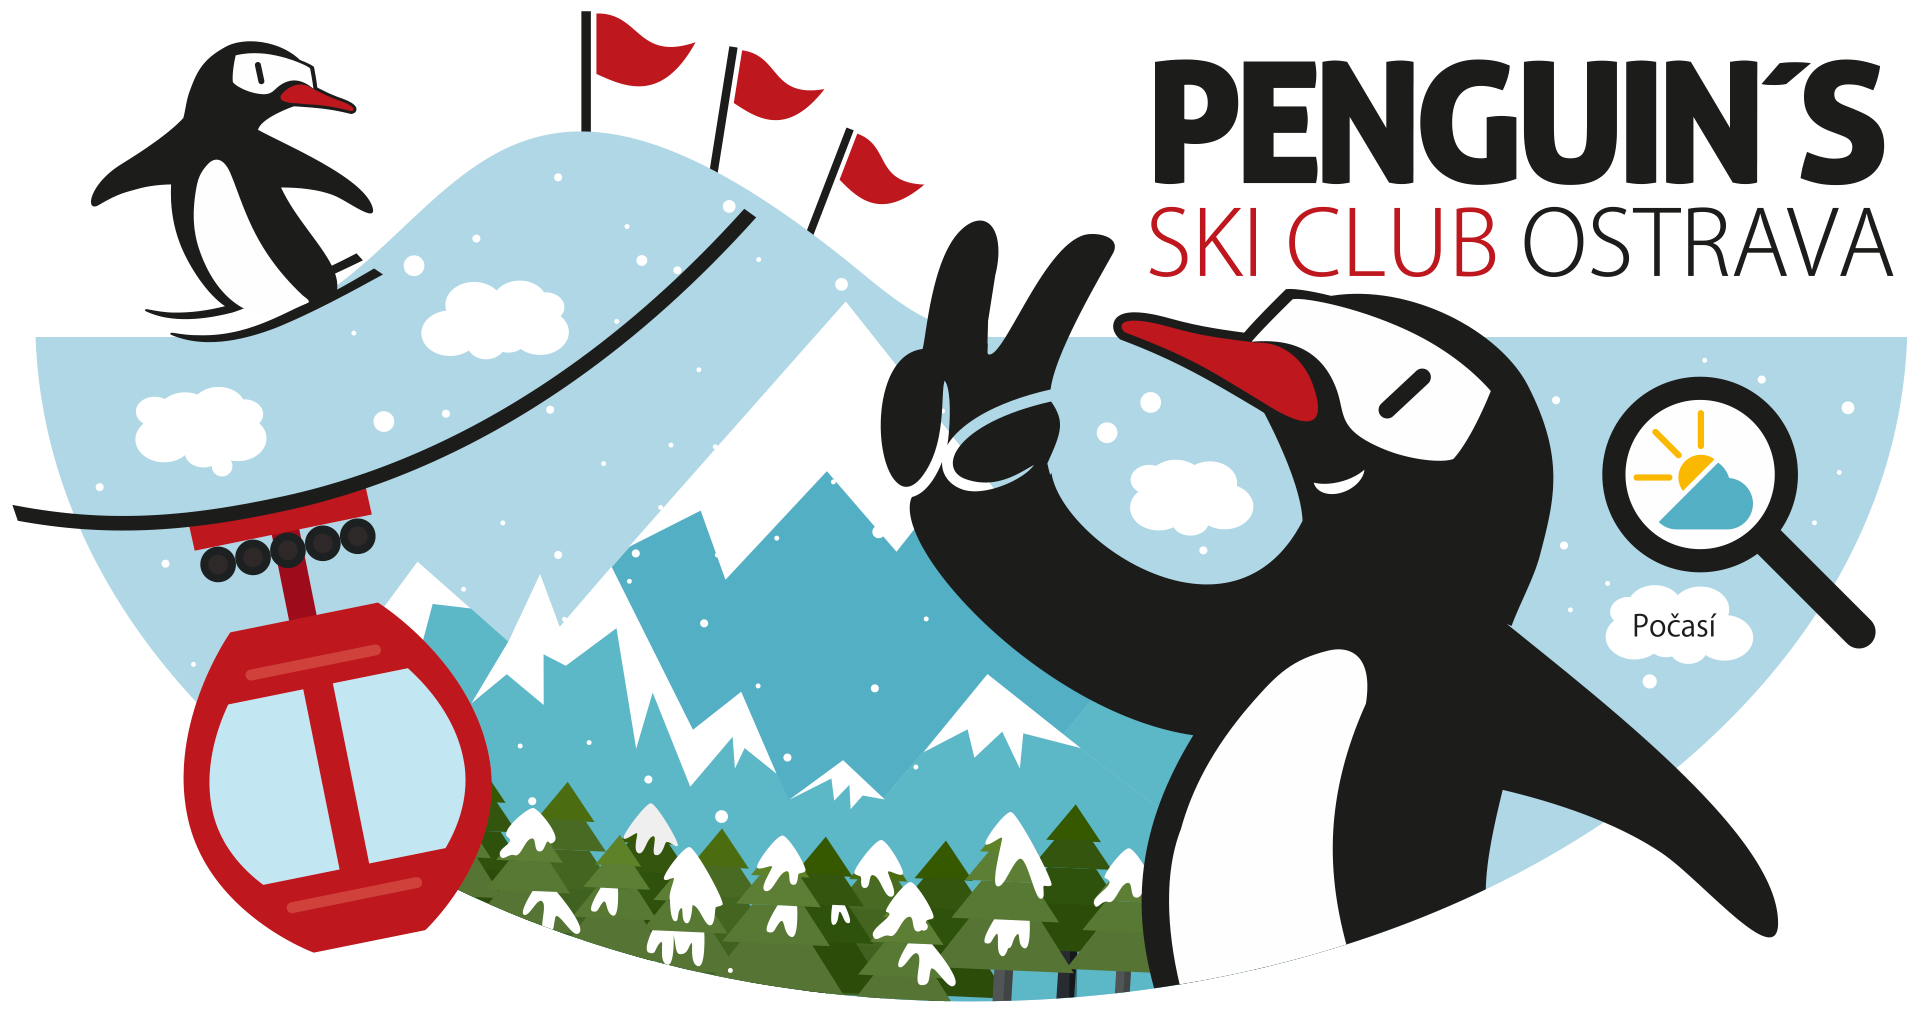 Penguin's Ski Club header image